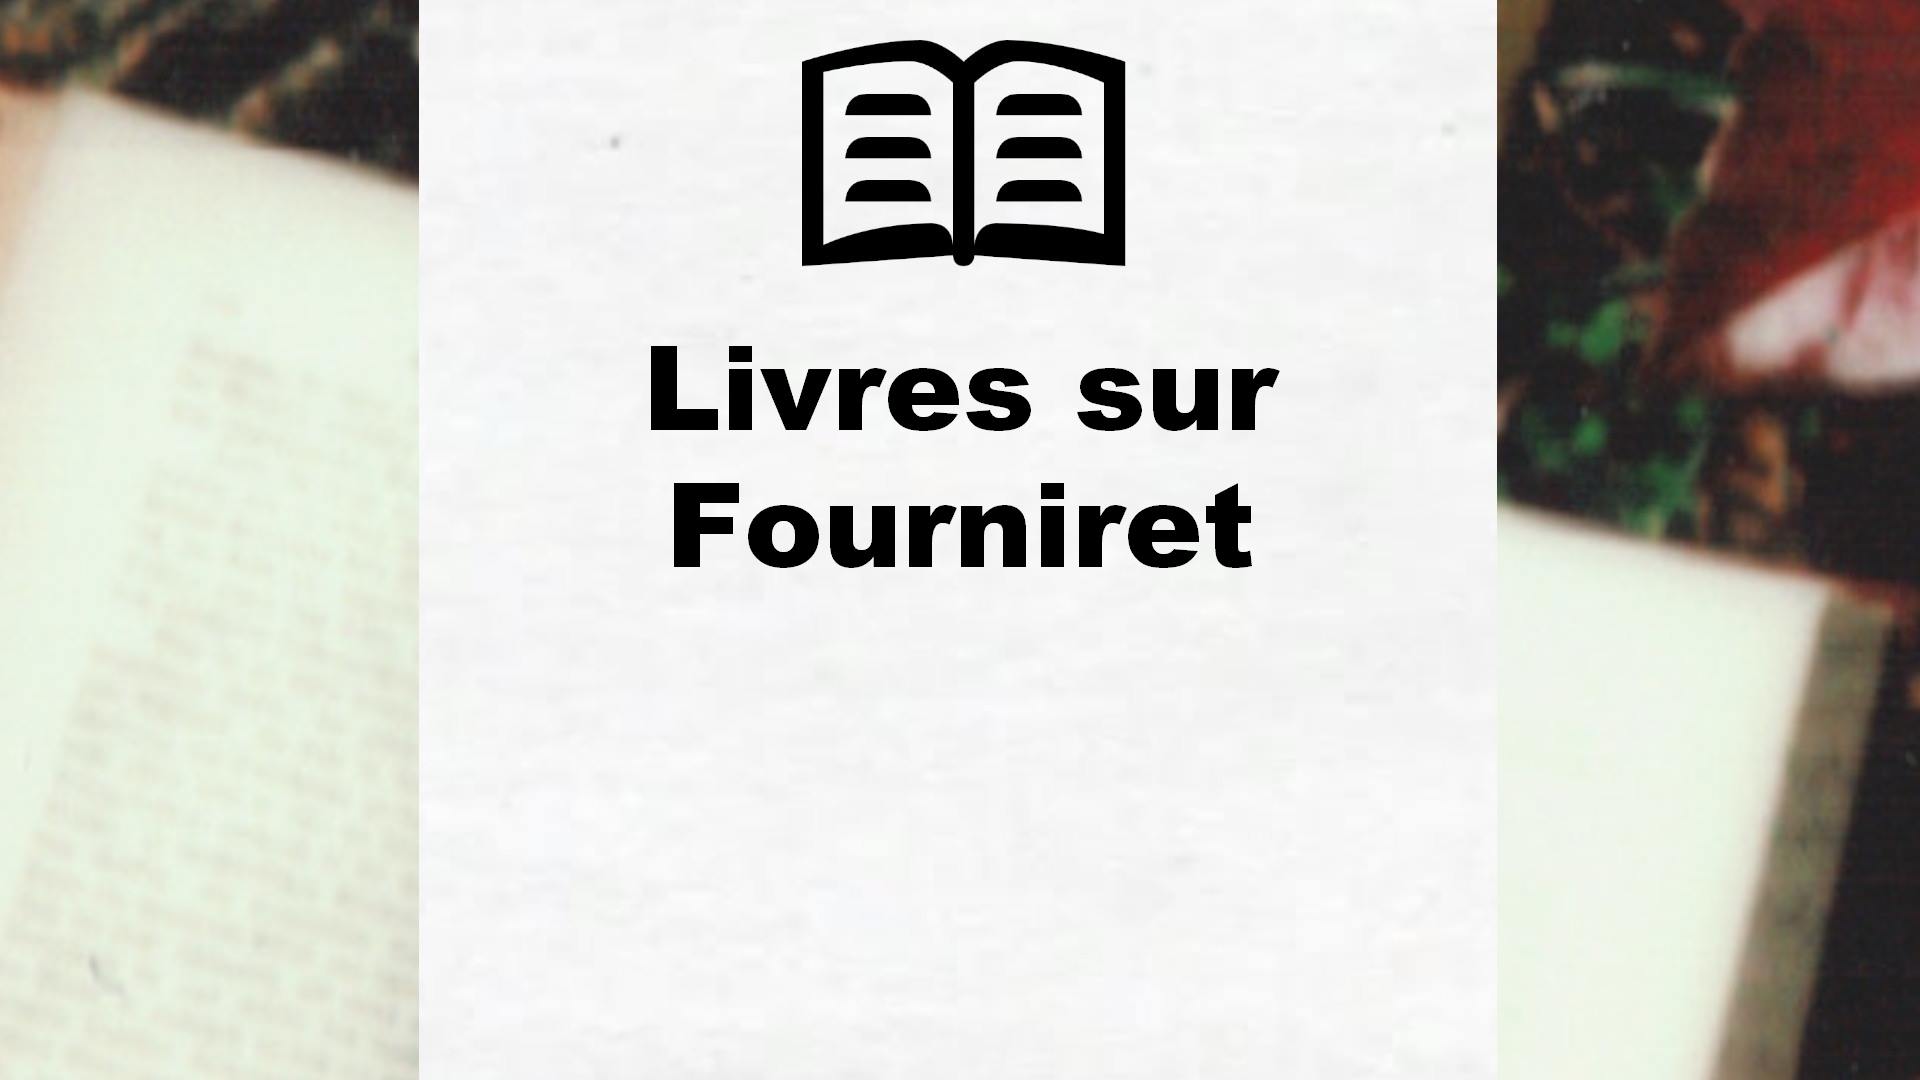 Livres sur Fourniret